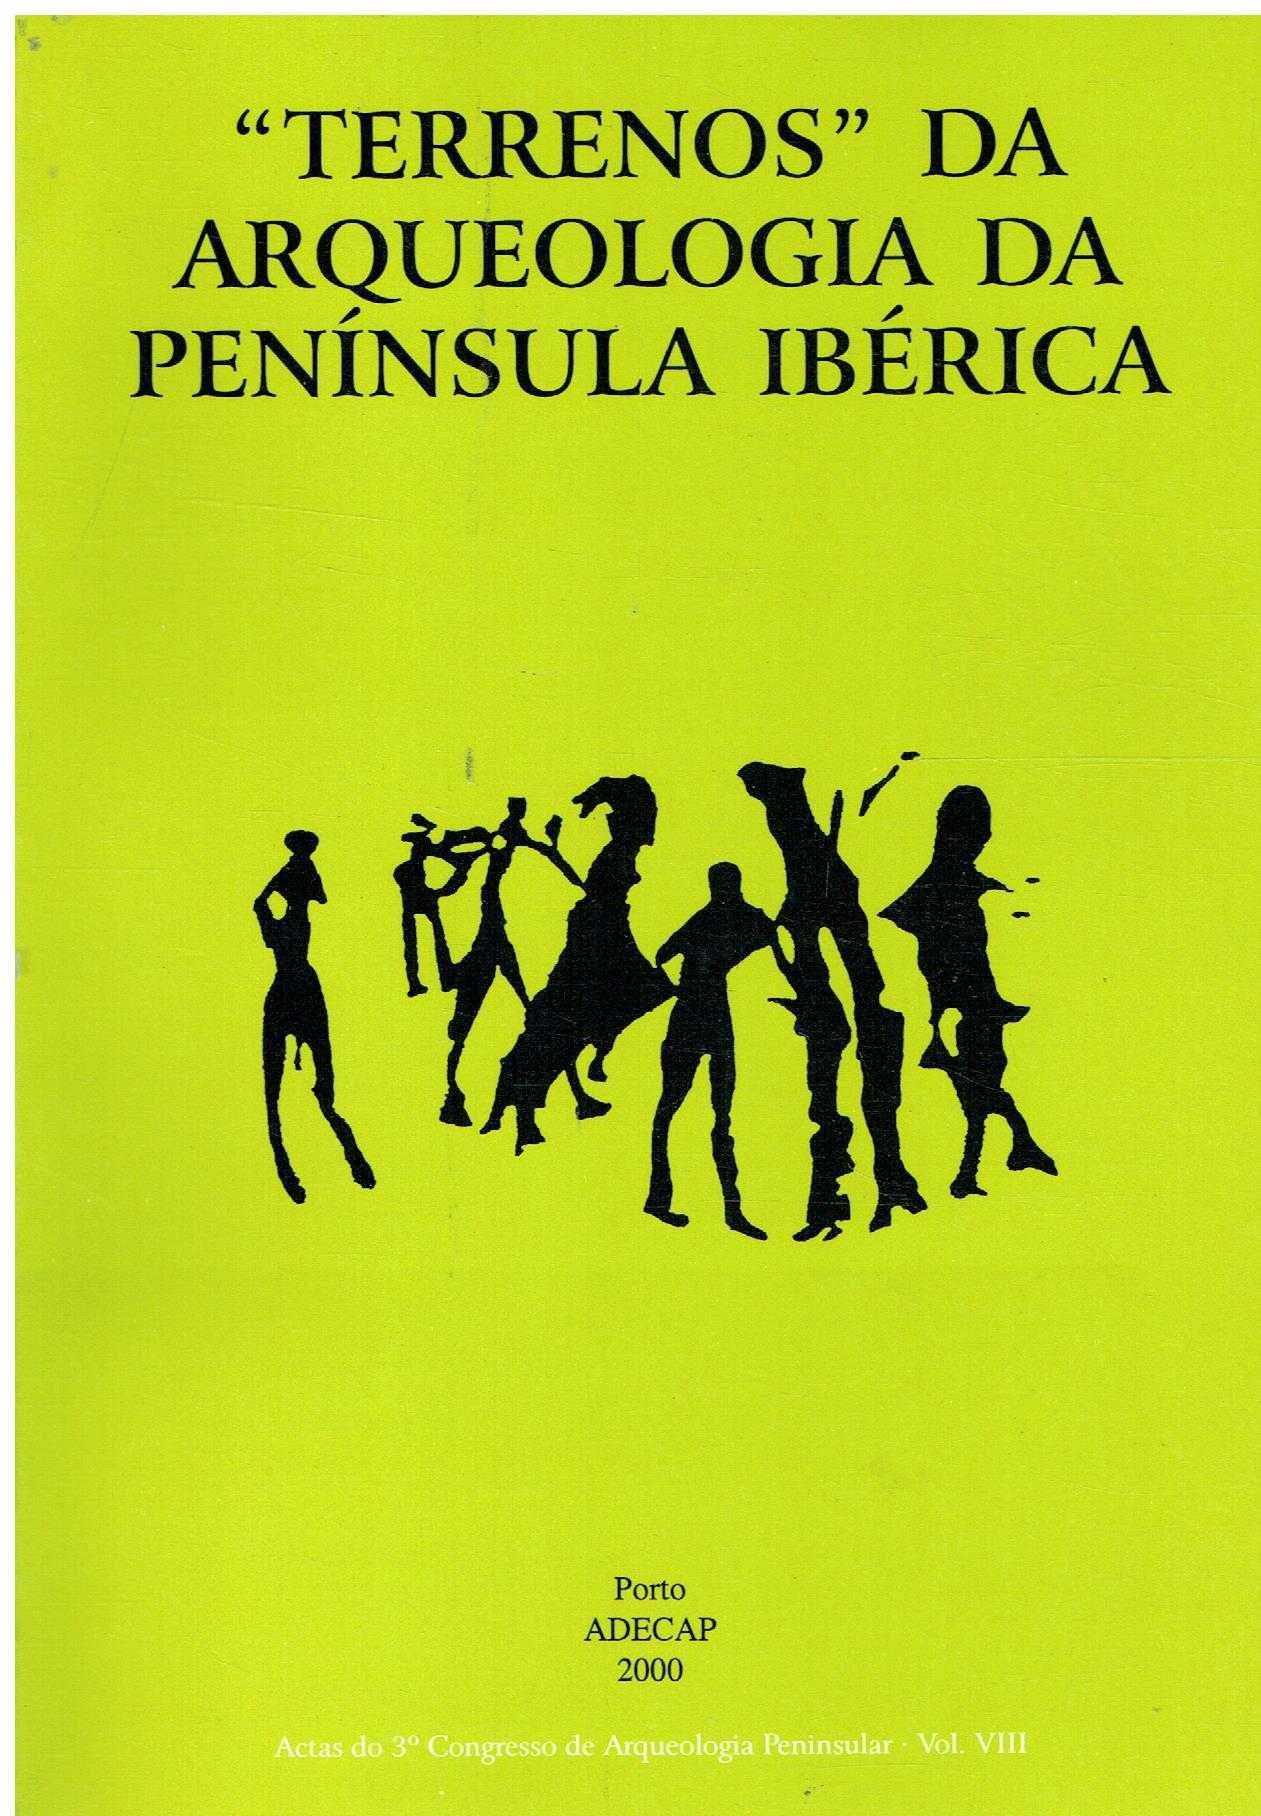 5296

"Terrenos" da Arqueologia da Península Ibérica